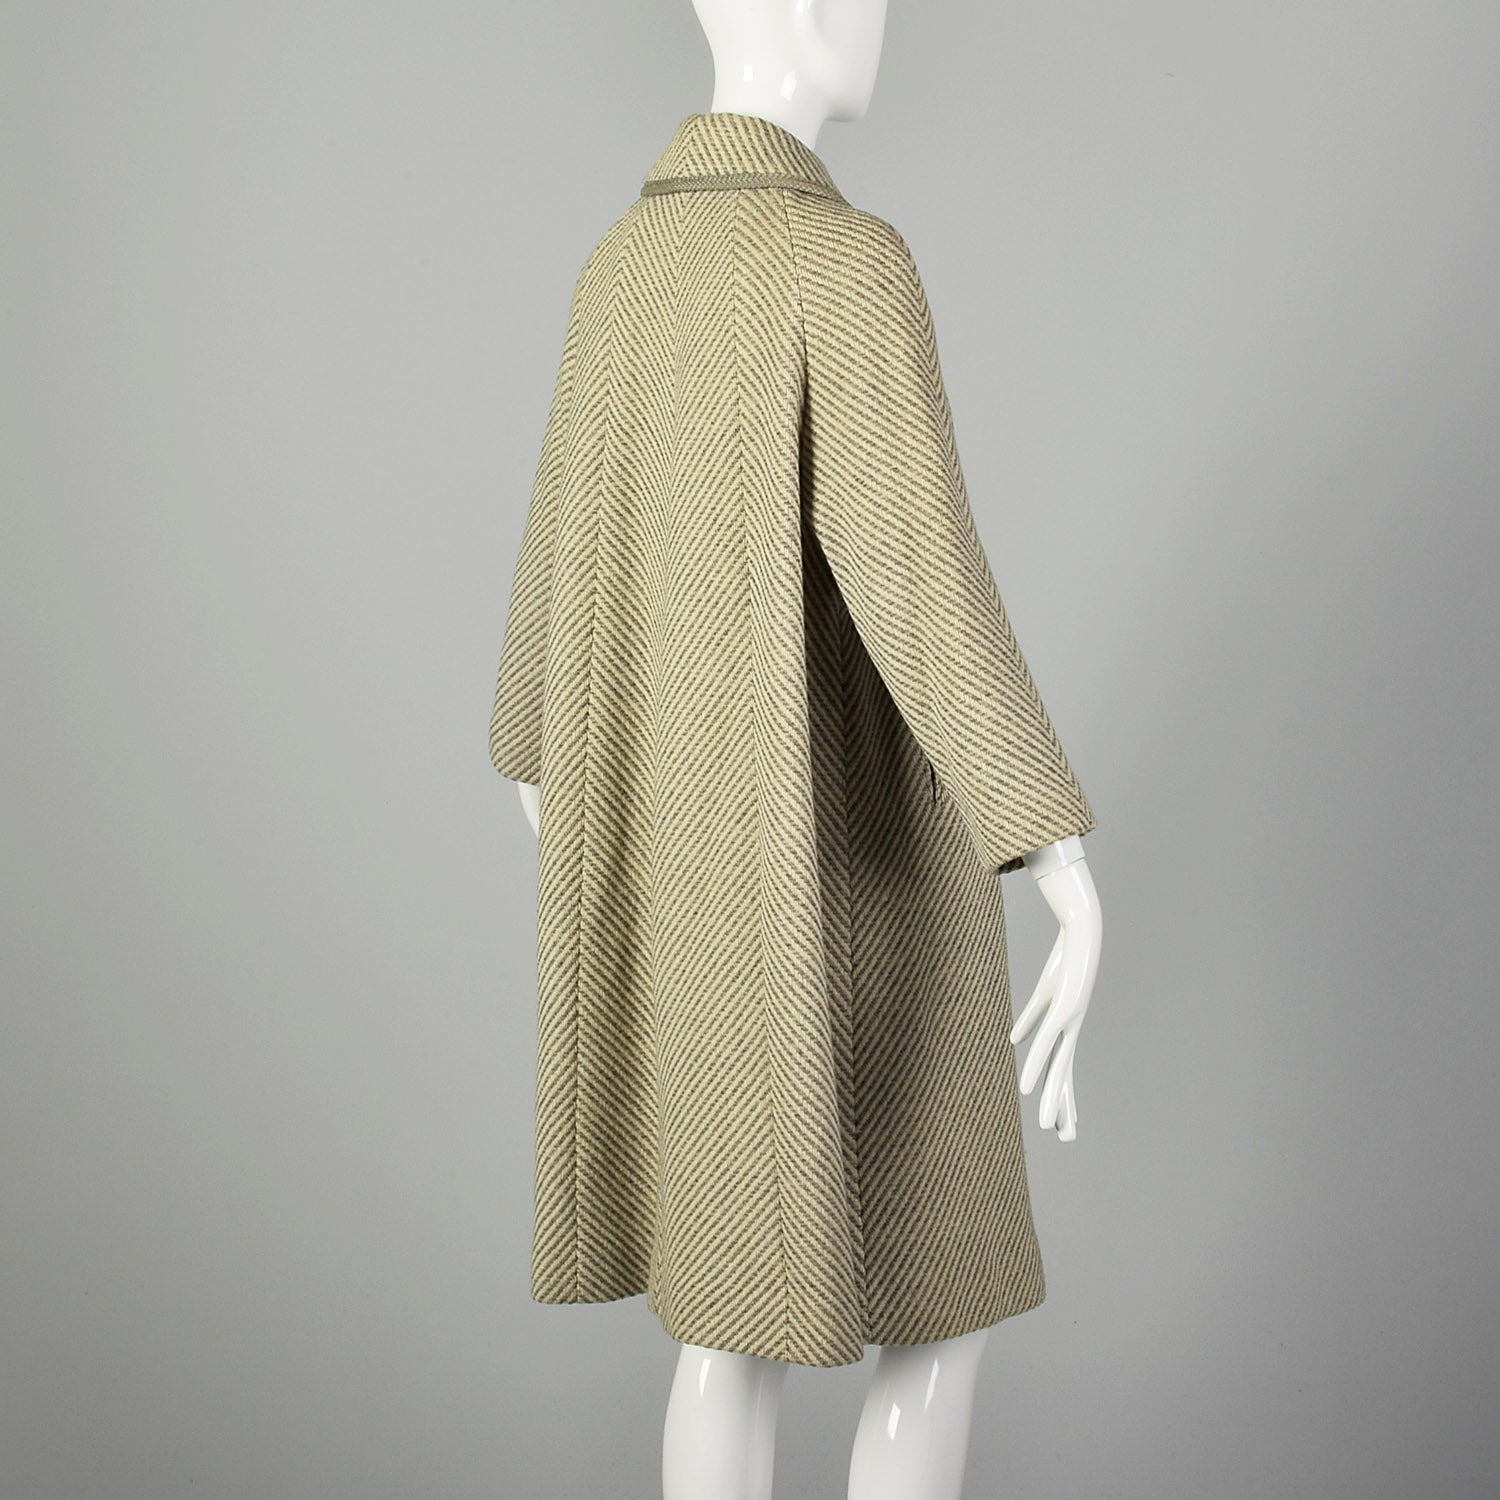 Large 1950s Swing Coat Gray Herringbone Stripe Wool Tweed Peter Pan Collar Winter Outerwear